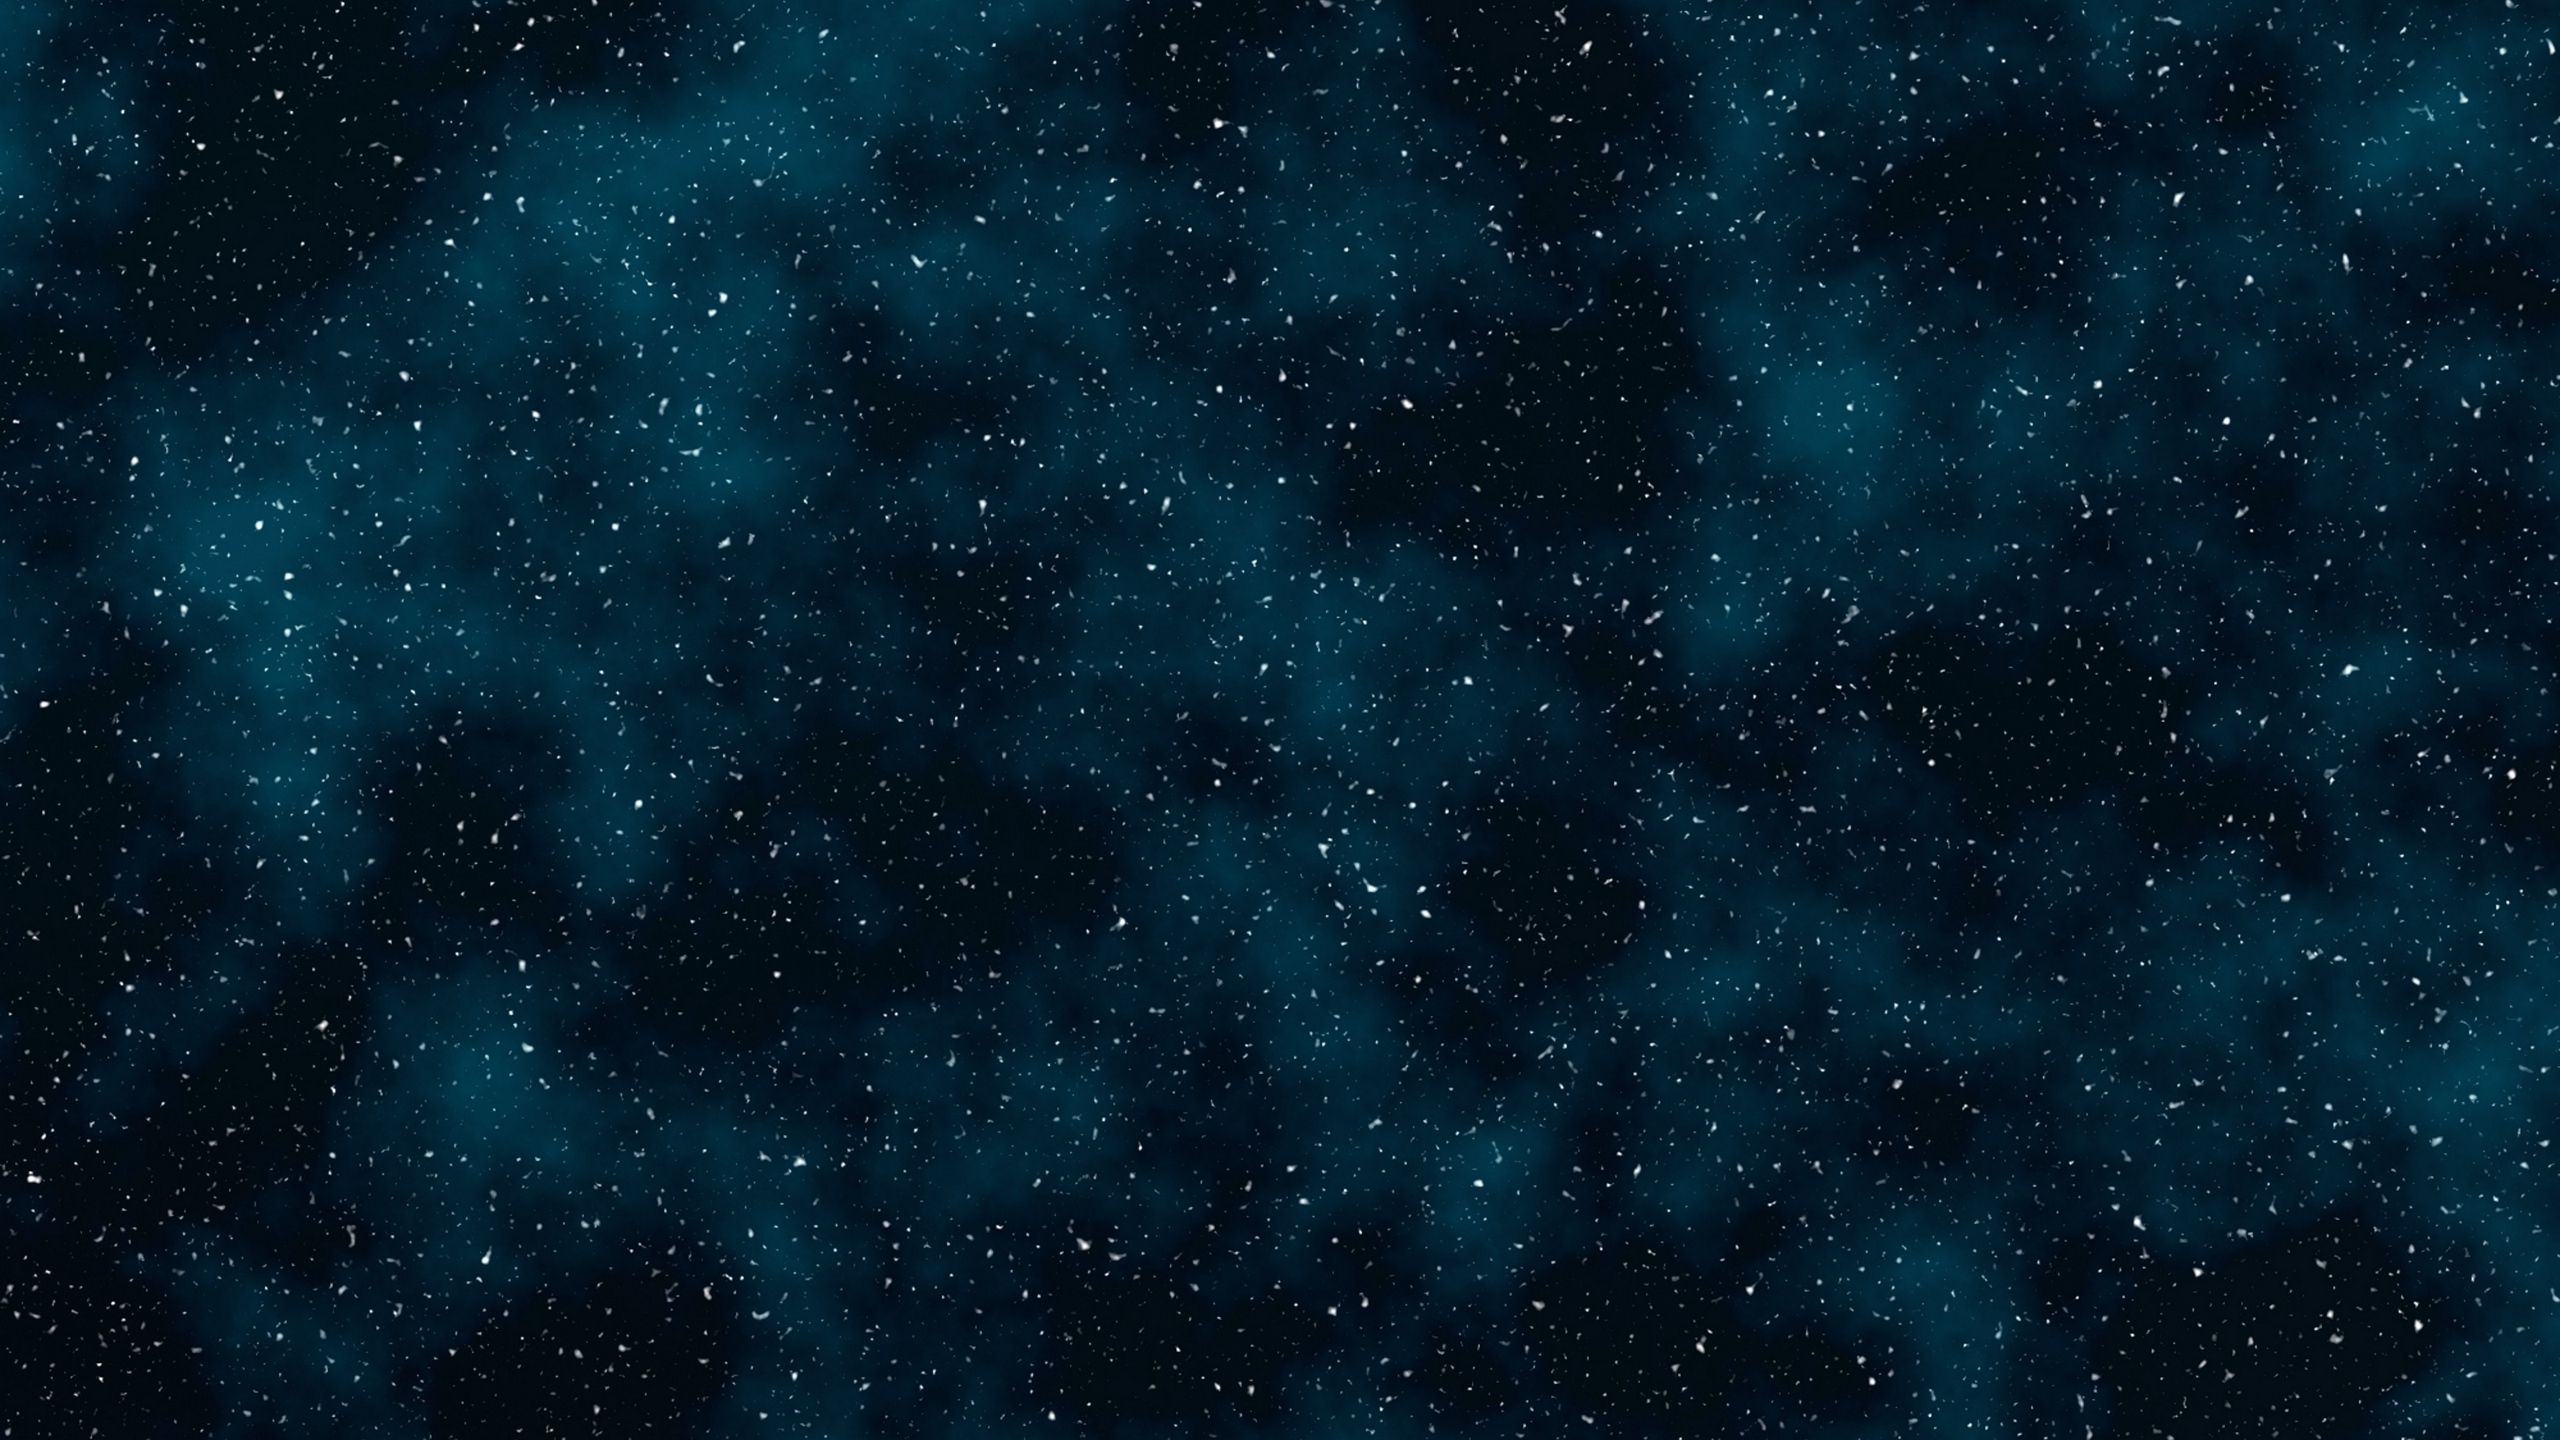 Download wallpaper 2560x1440 stars, universe, space widescreen 16